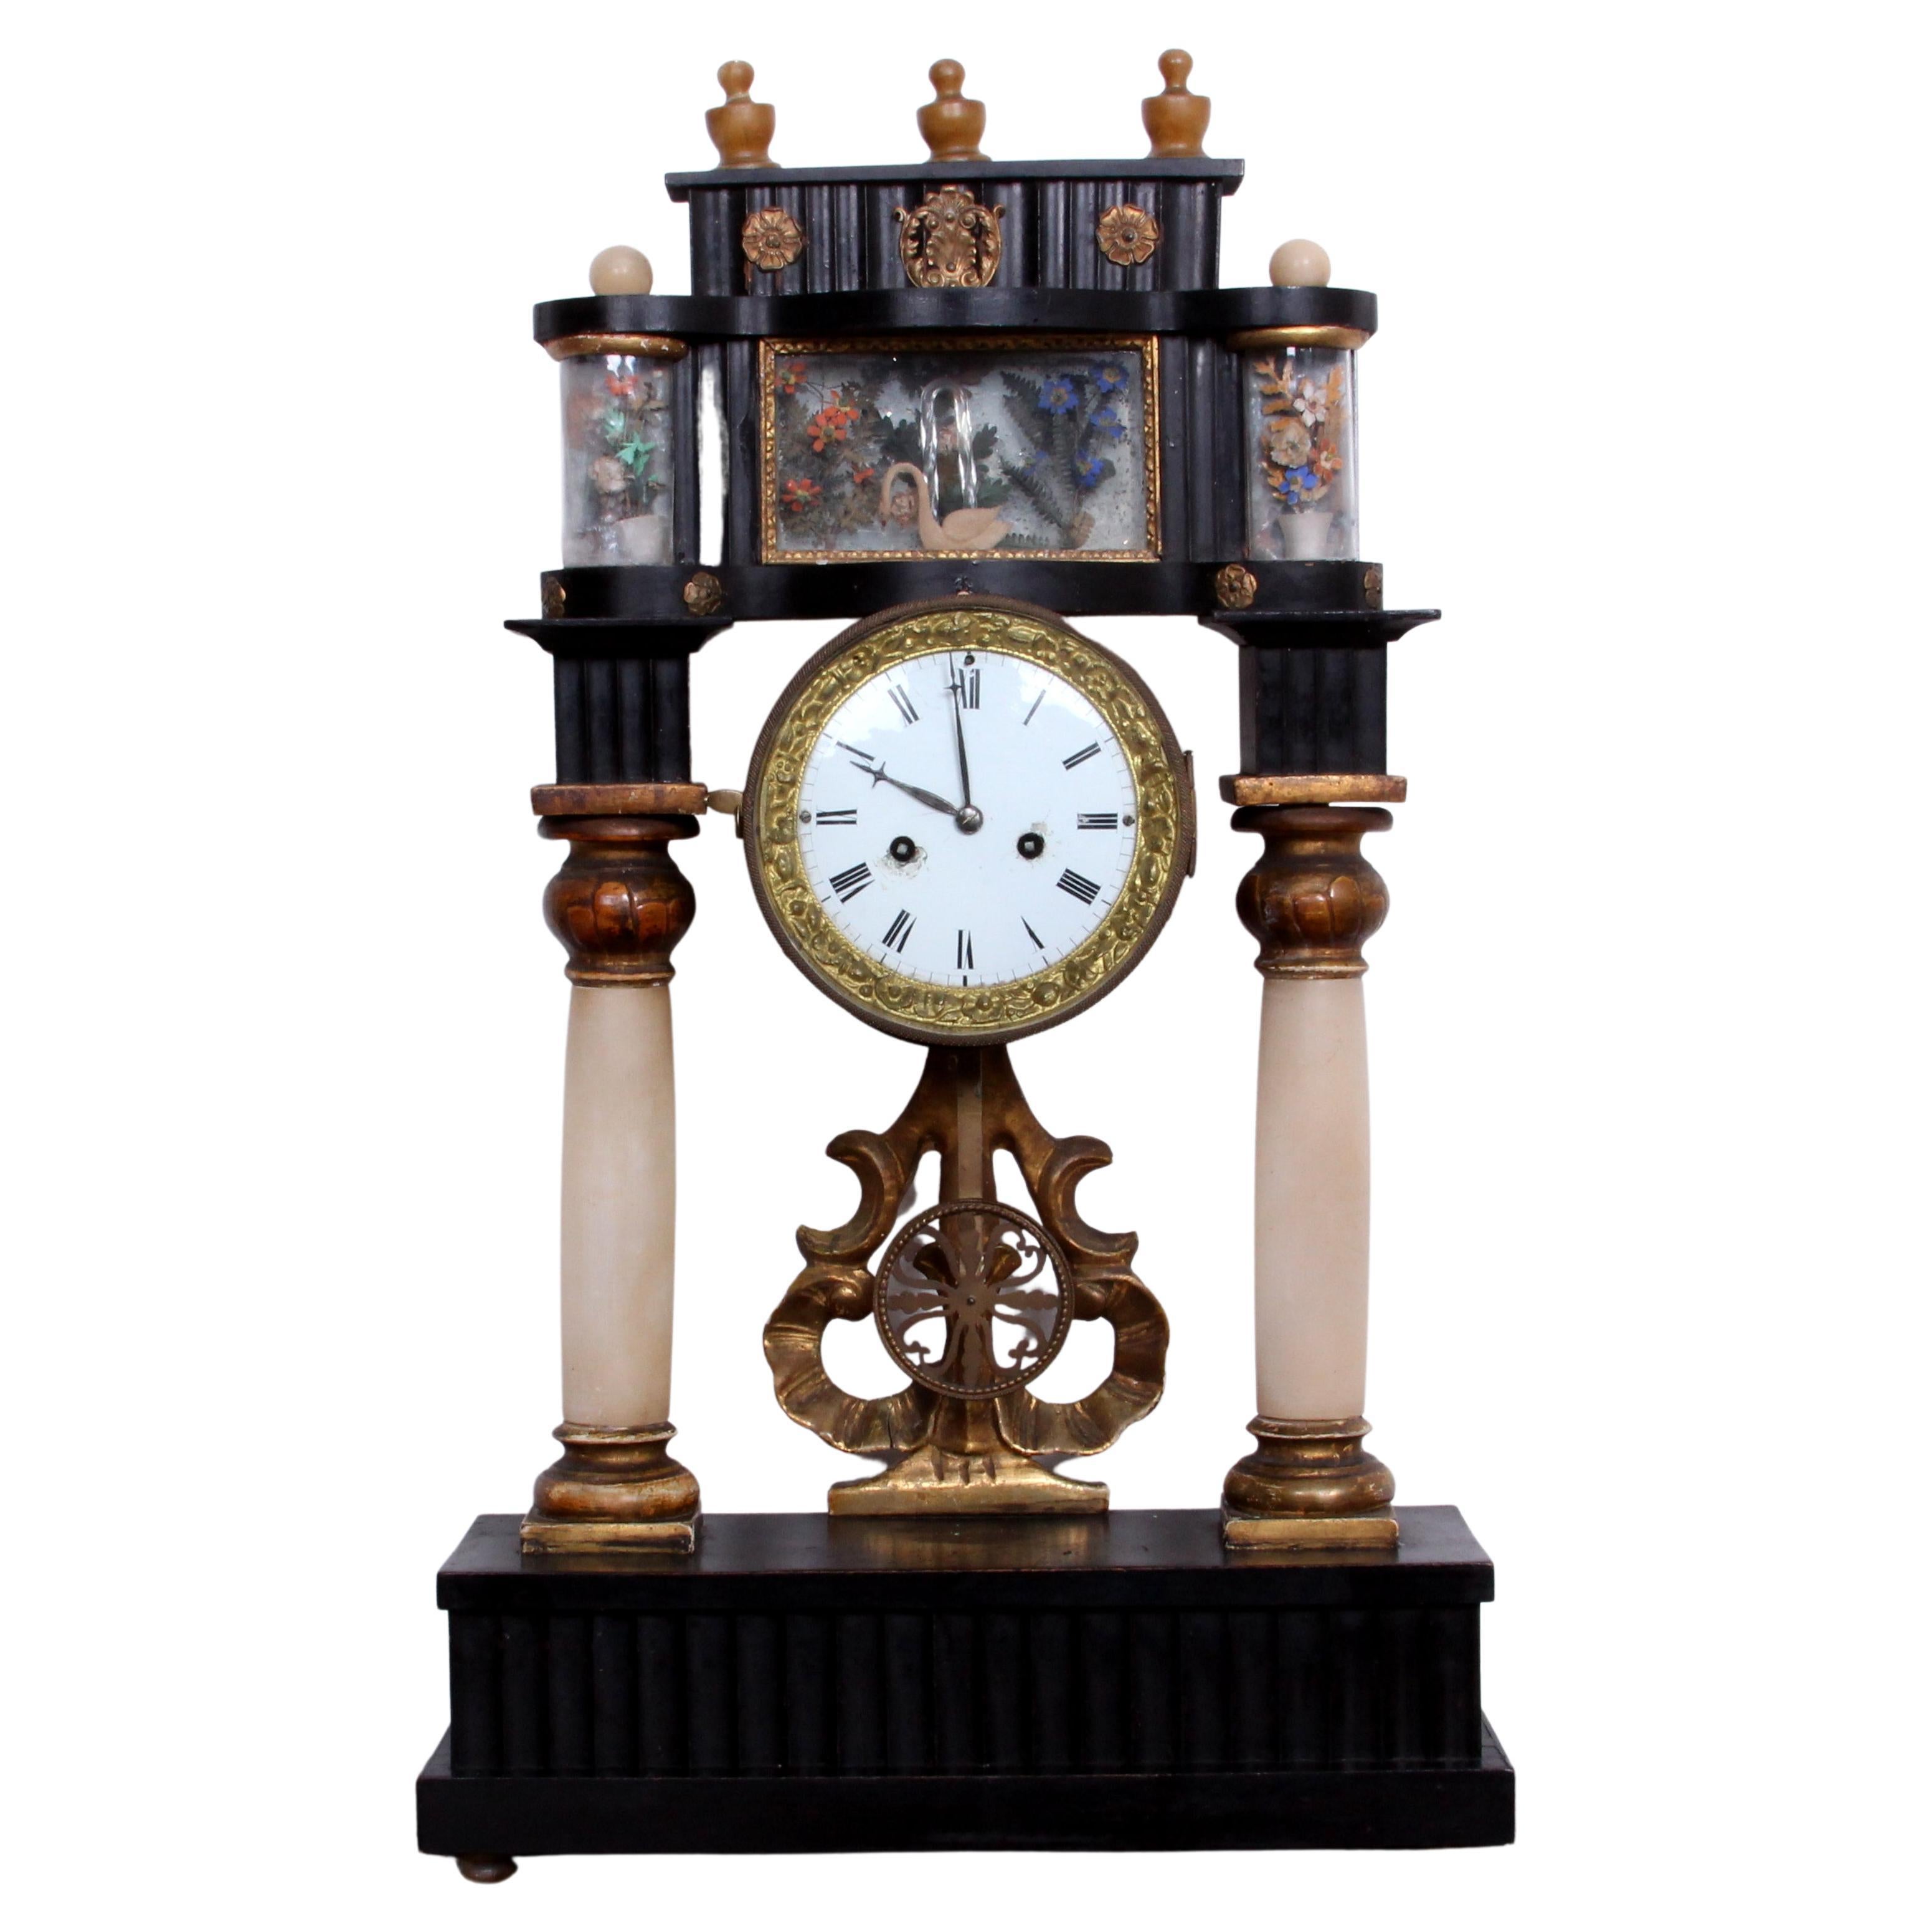 Viennese Column Clock Portal Clock Biedermeier era min flower showcase ar. 1840 